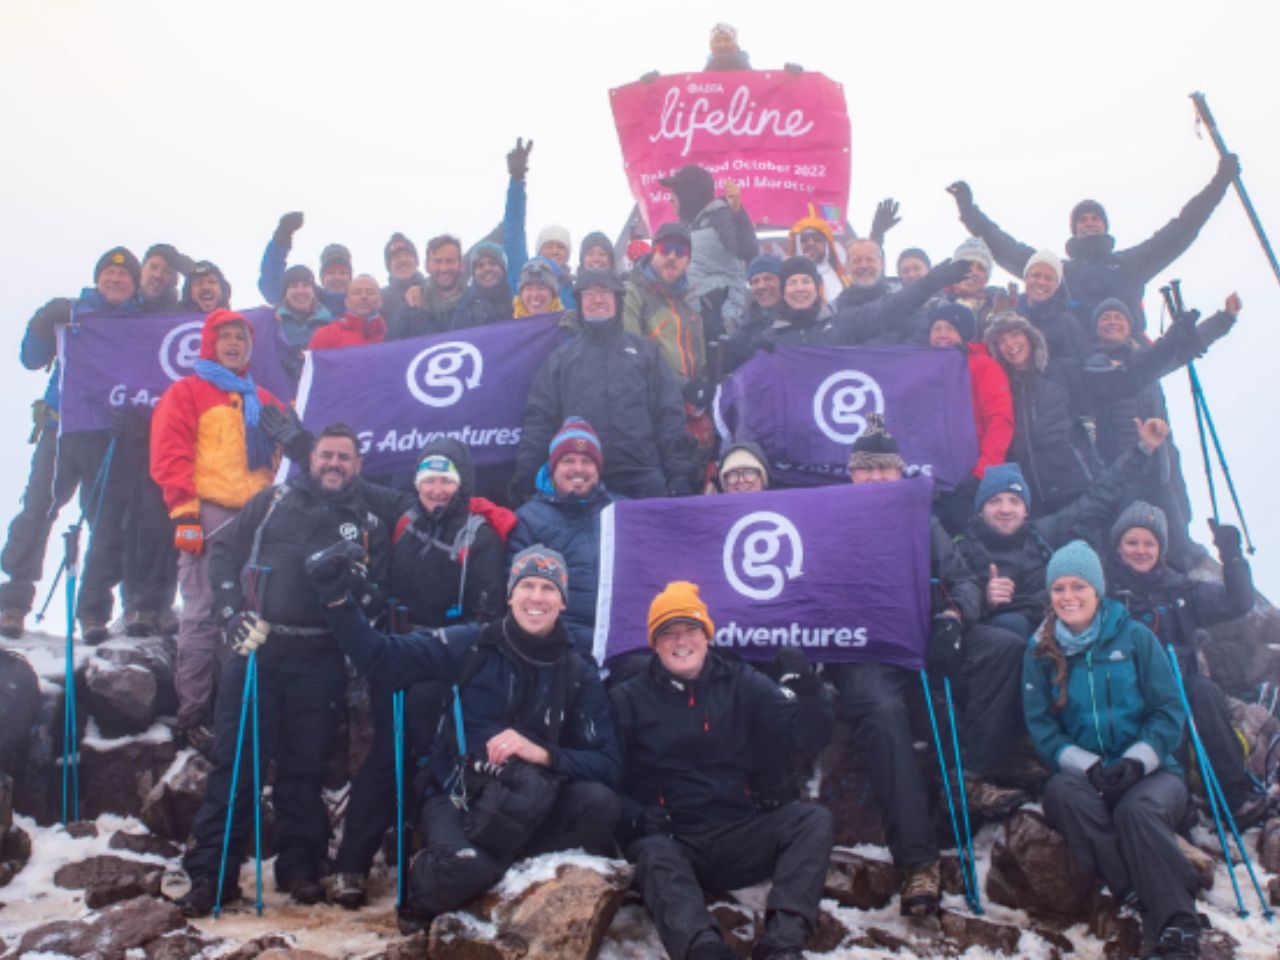 G Adventures climbers raise £30k for Abta LifeLine and Planeterra